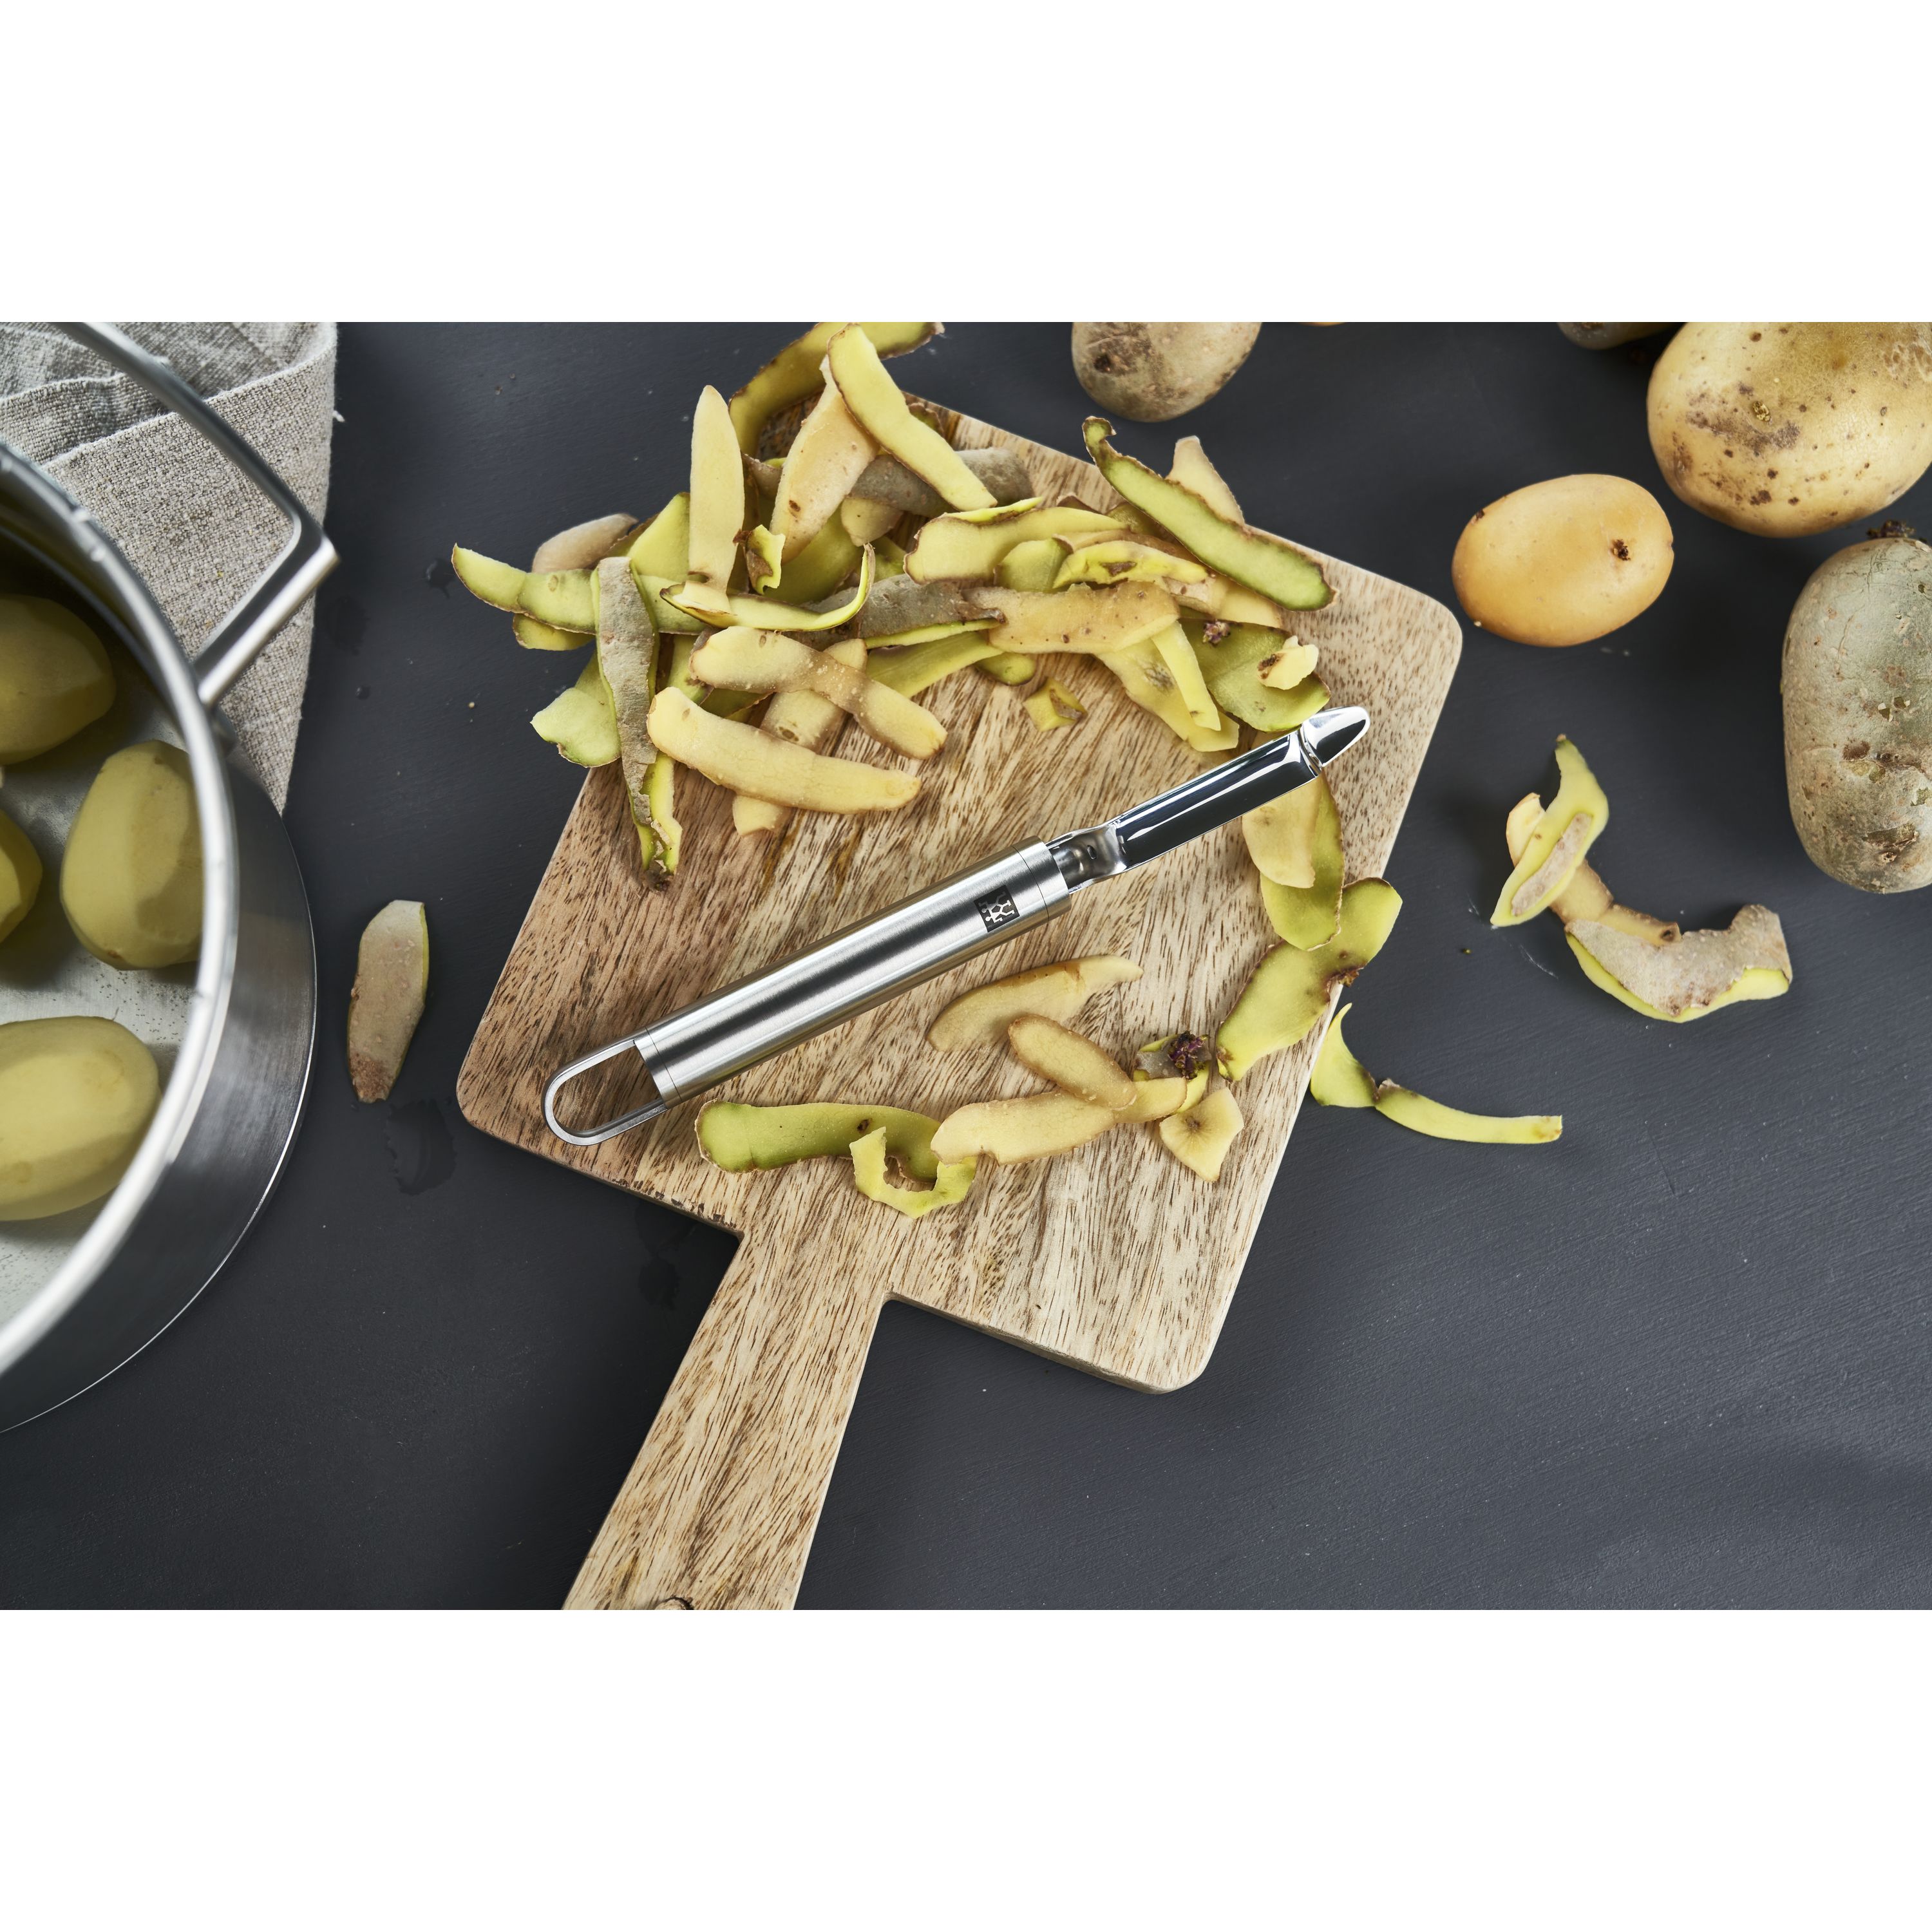 Gourmet Quality Ceramic Potato Vegetable Peeler Easy to Use Factory Direct